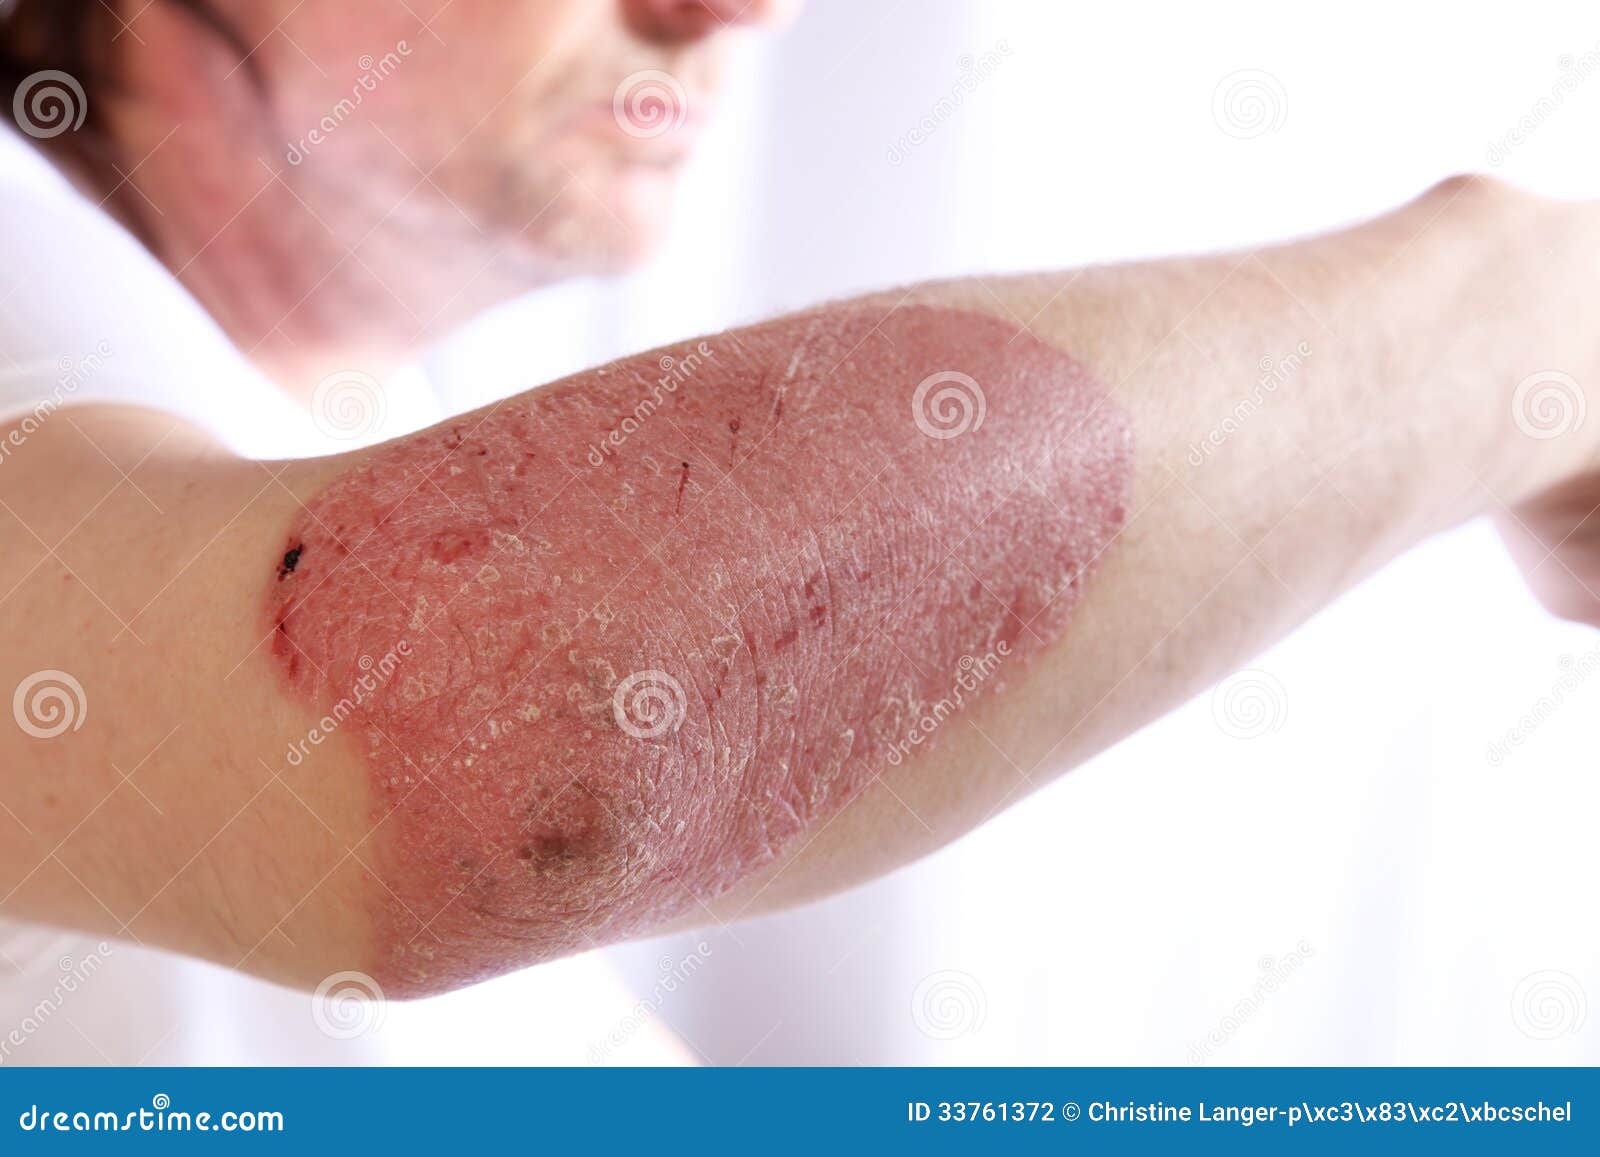 psoriasis painful elbows